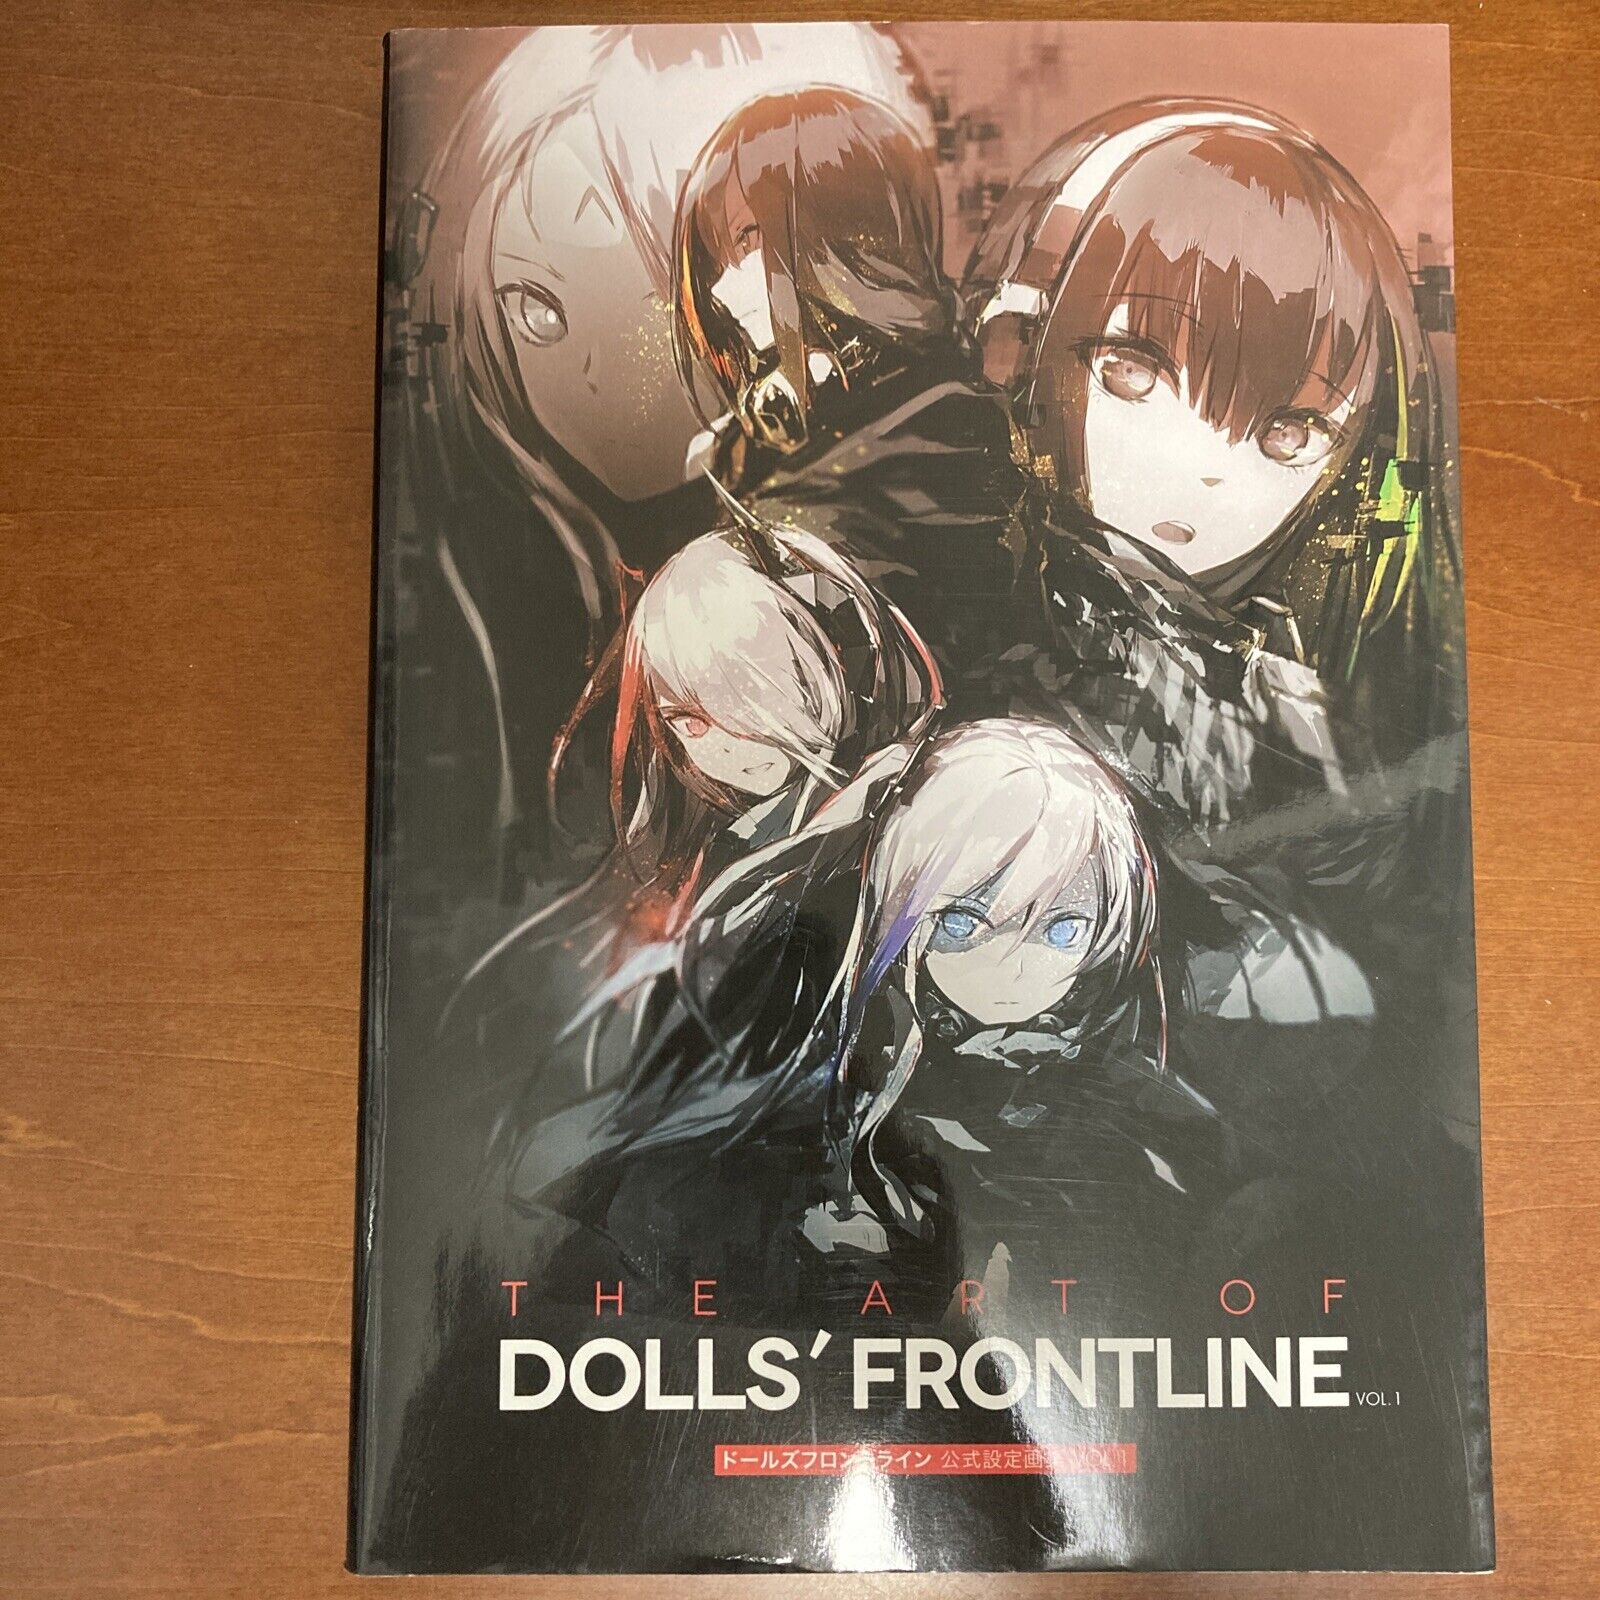 The Art of Dolls Frontline vol.1 Art Book Illustration